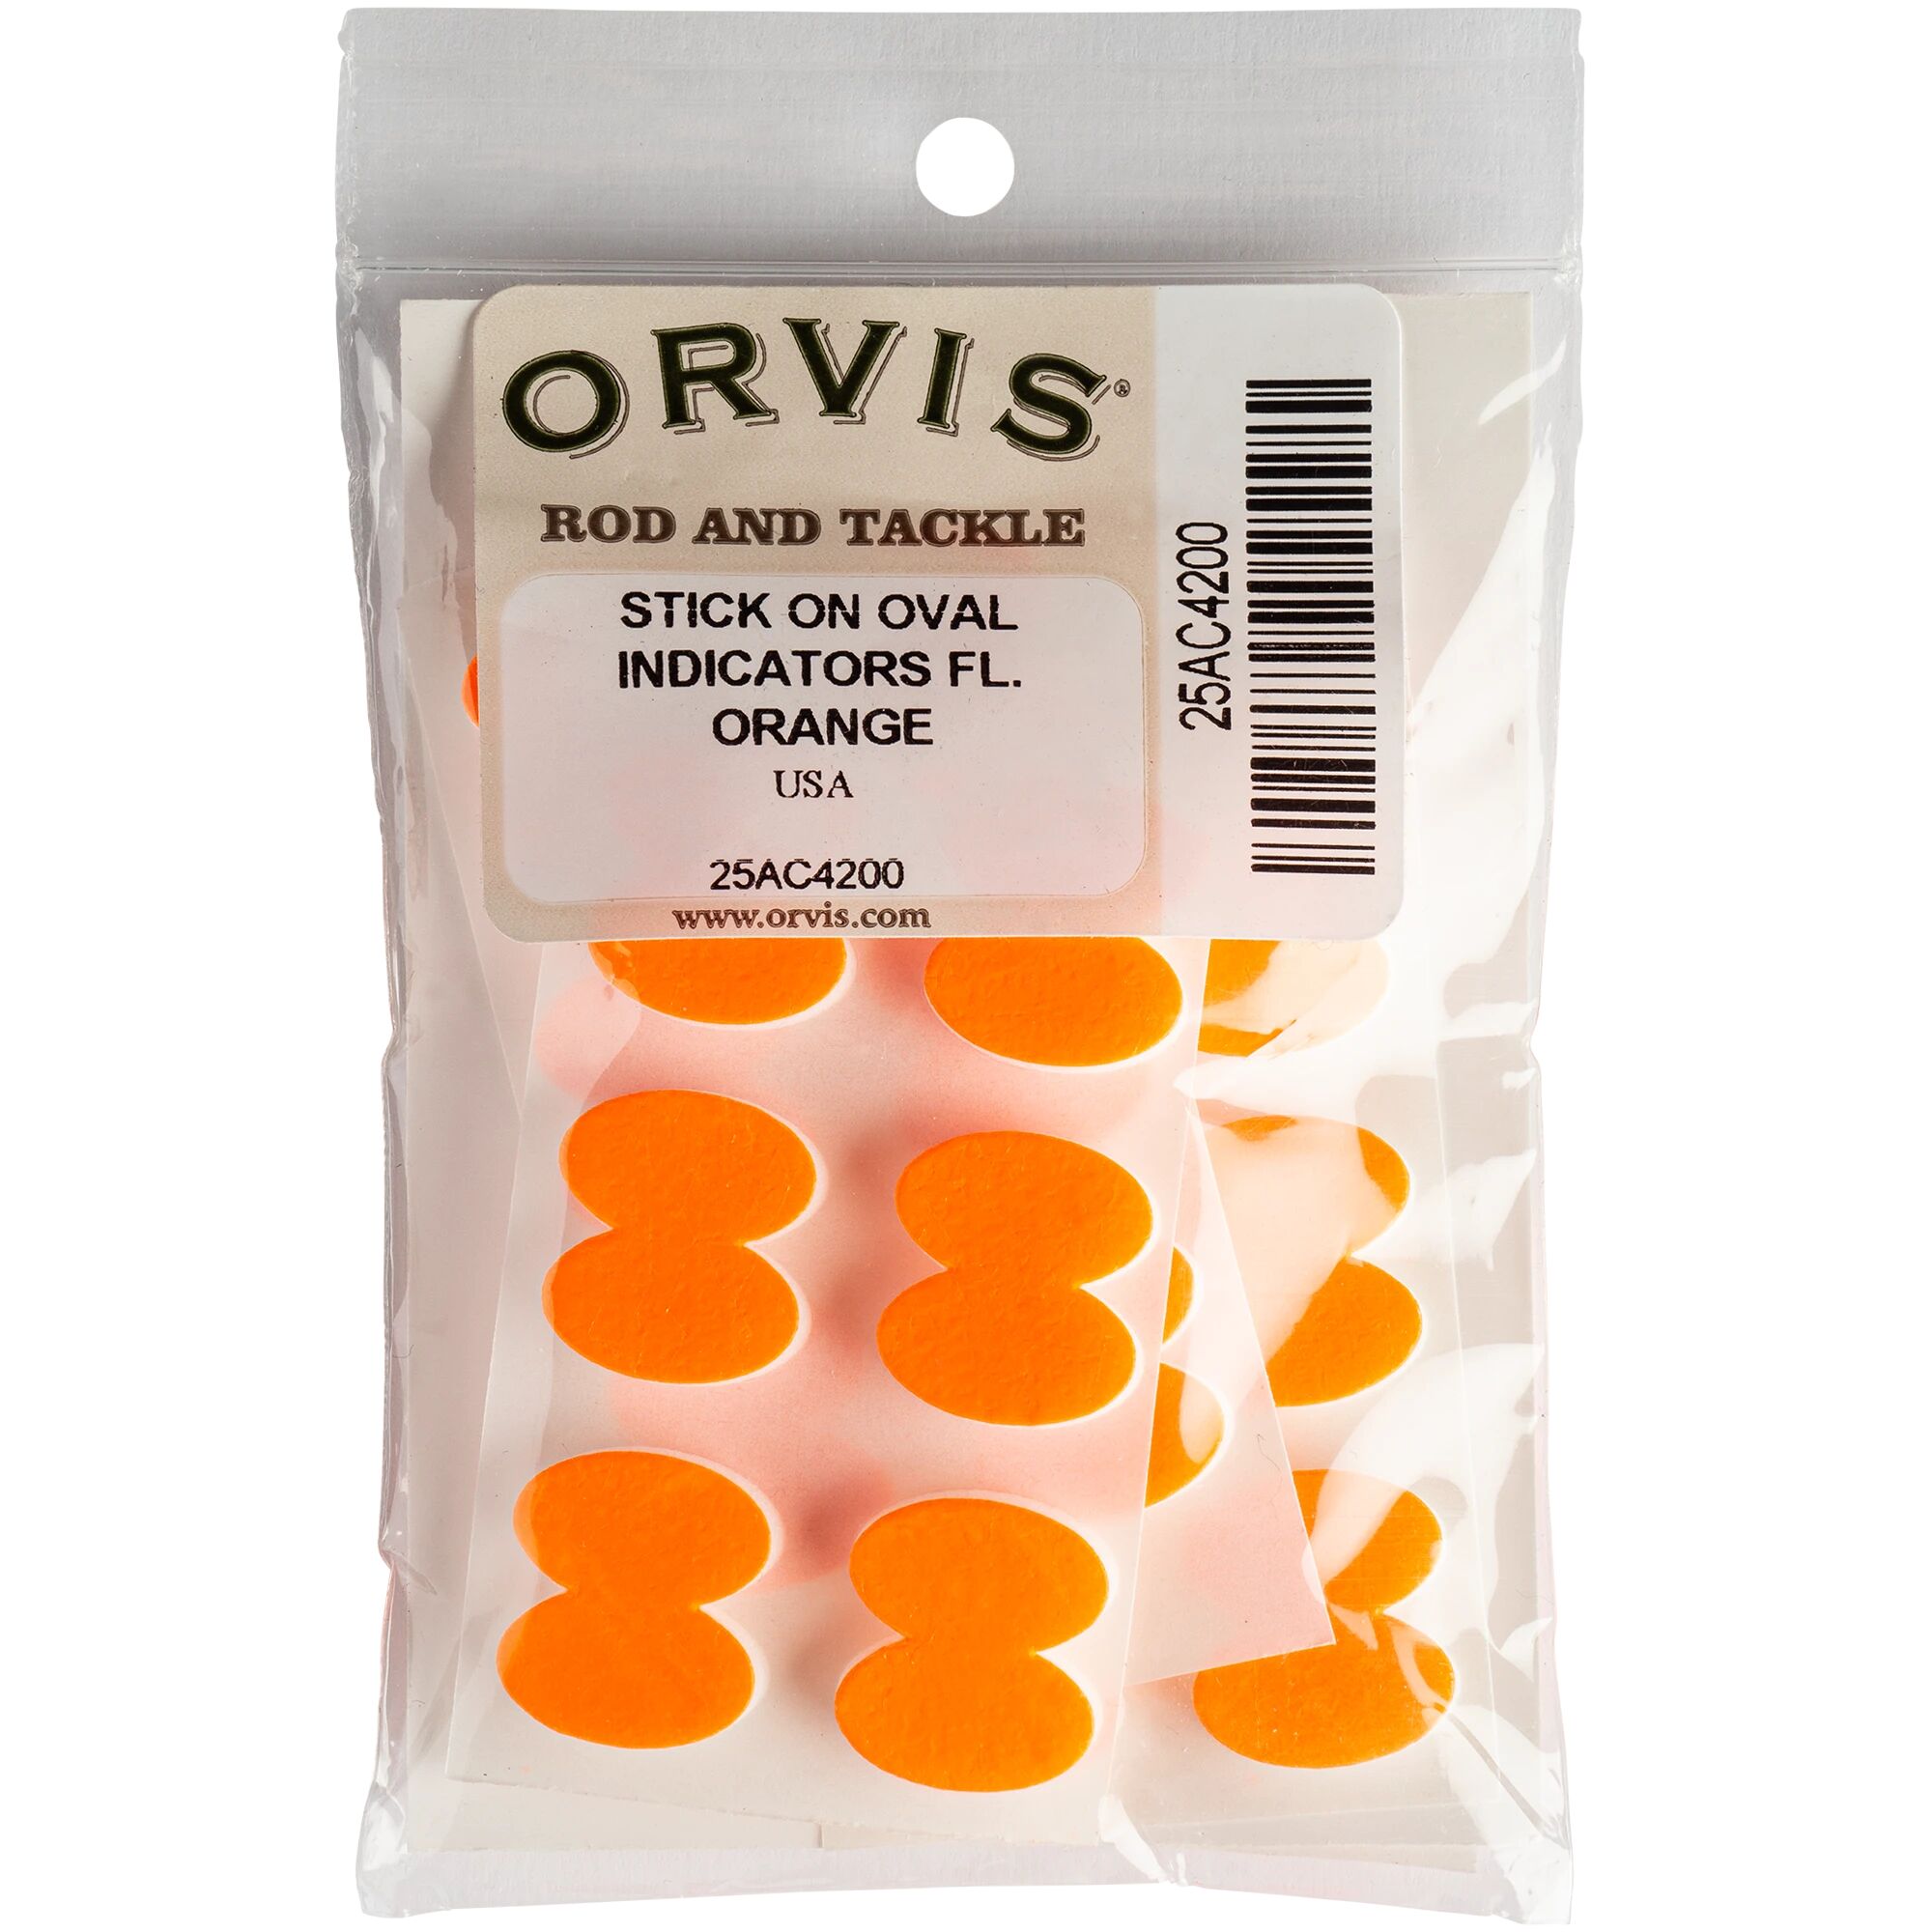 Orvis Stick-On Oval Indicator, nappindikator STD Fluo Orange